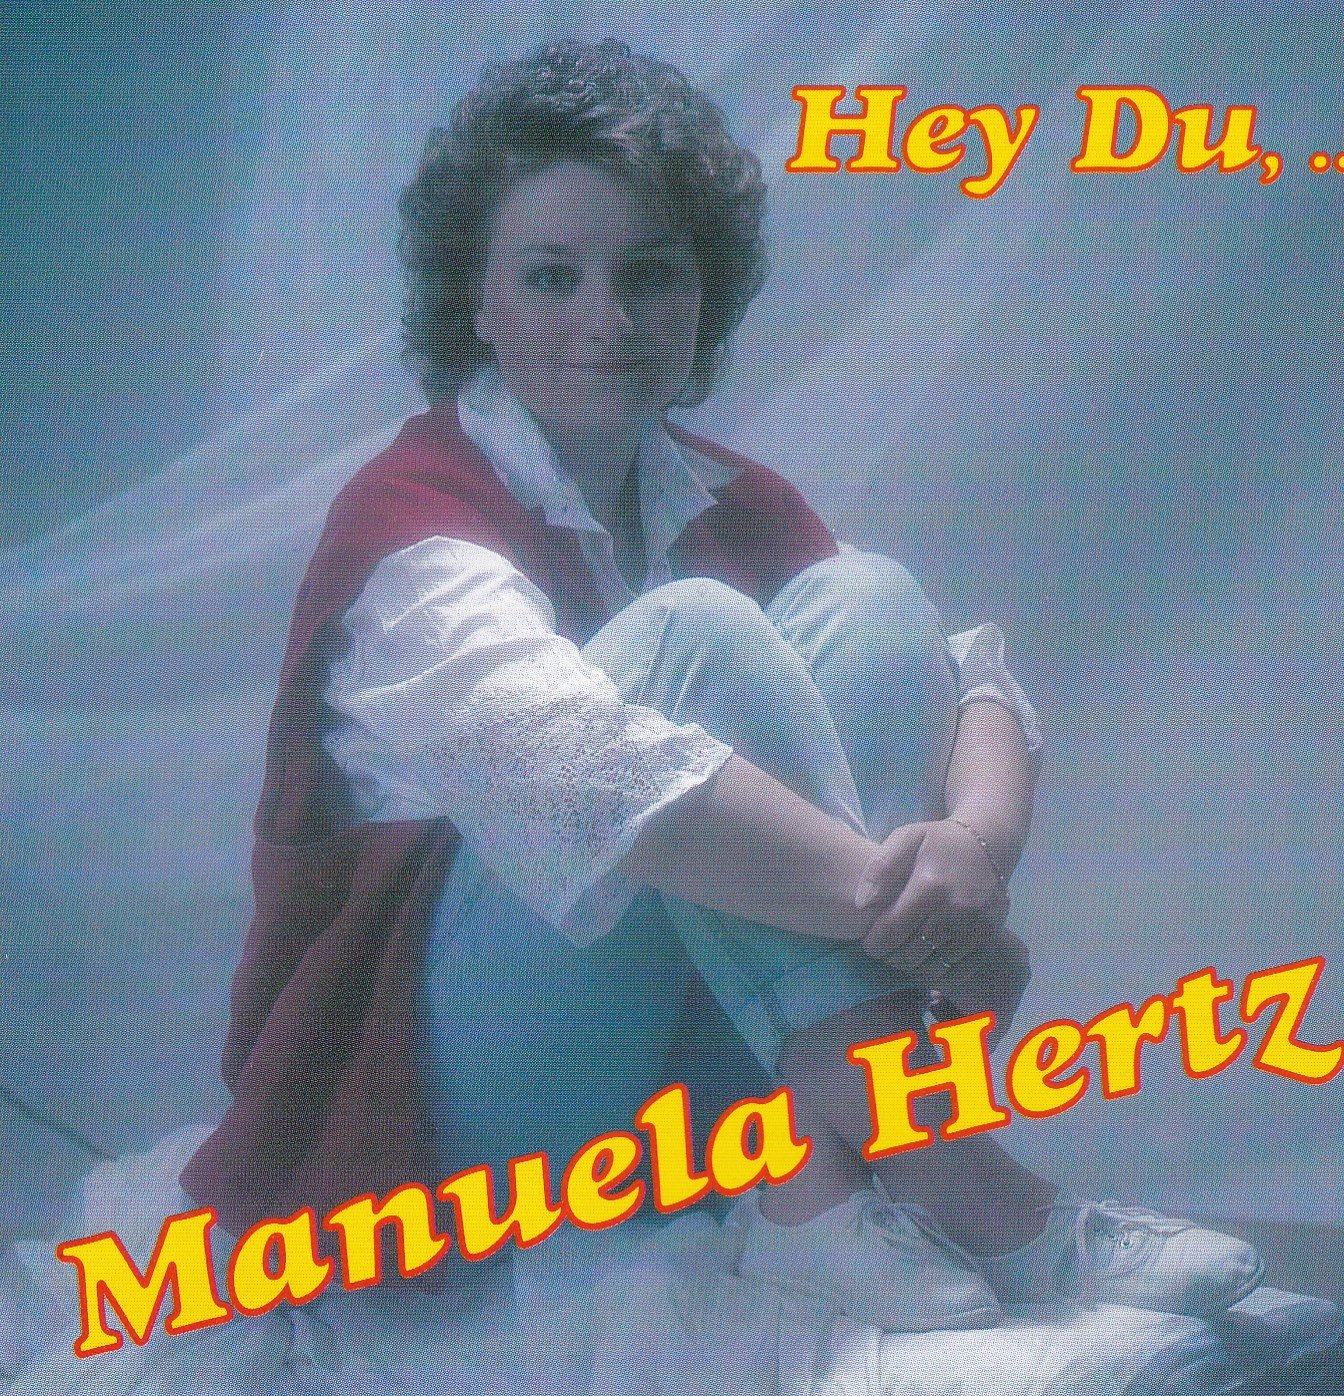 Manuela Hertz - Hey du